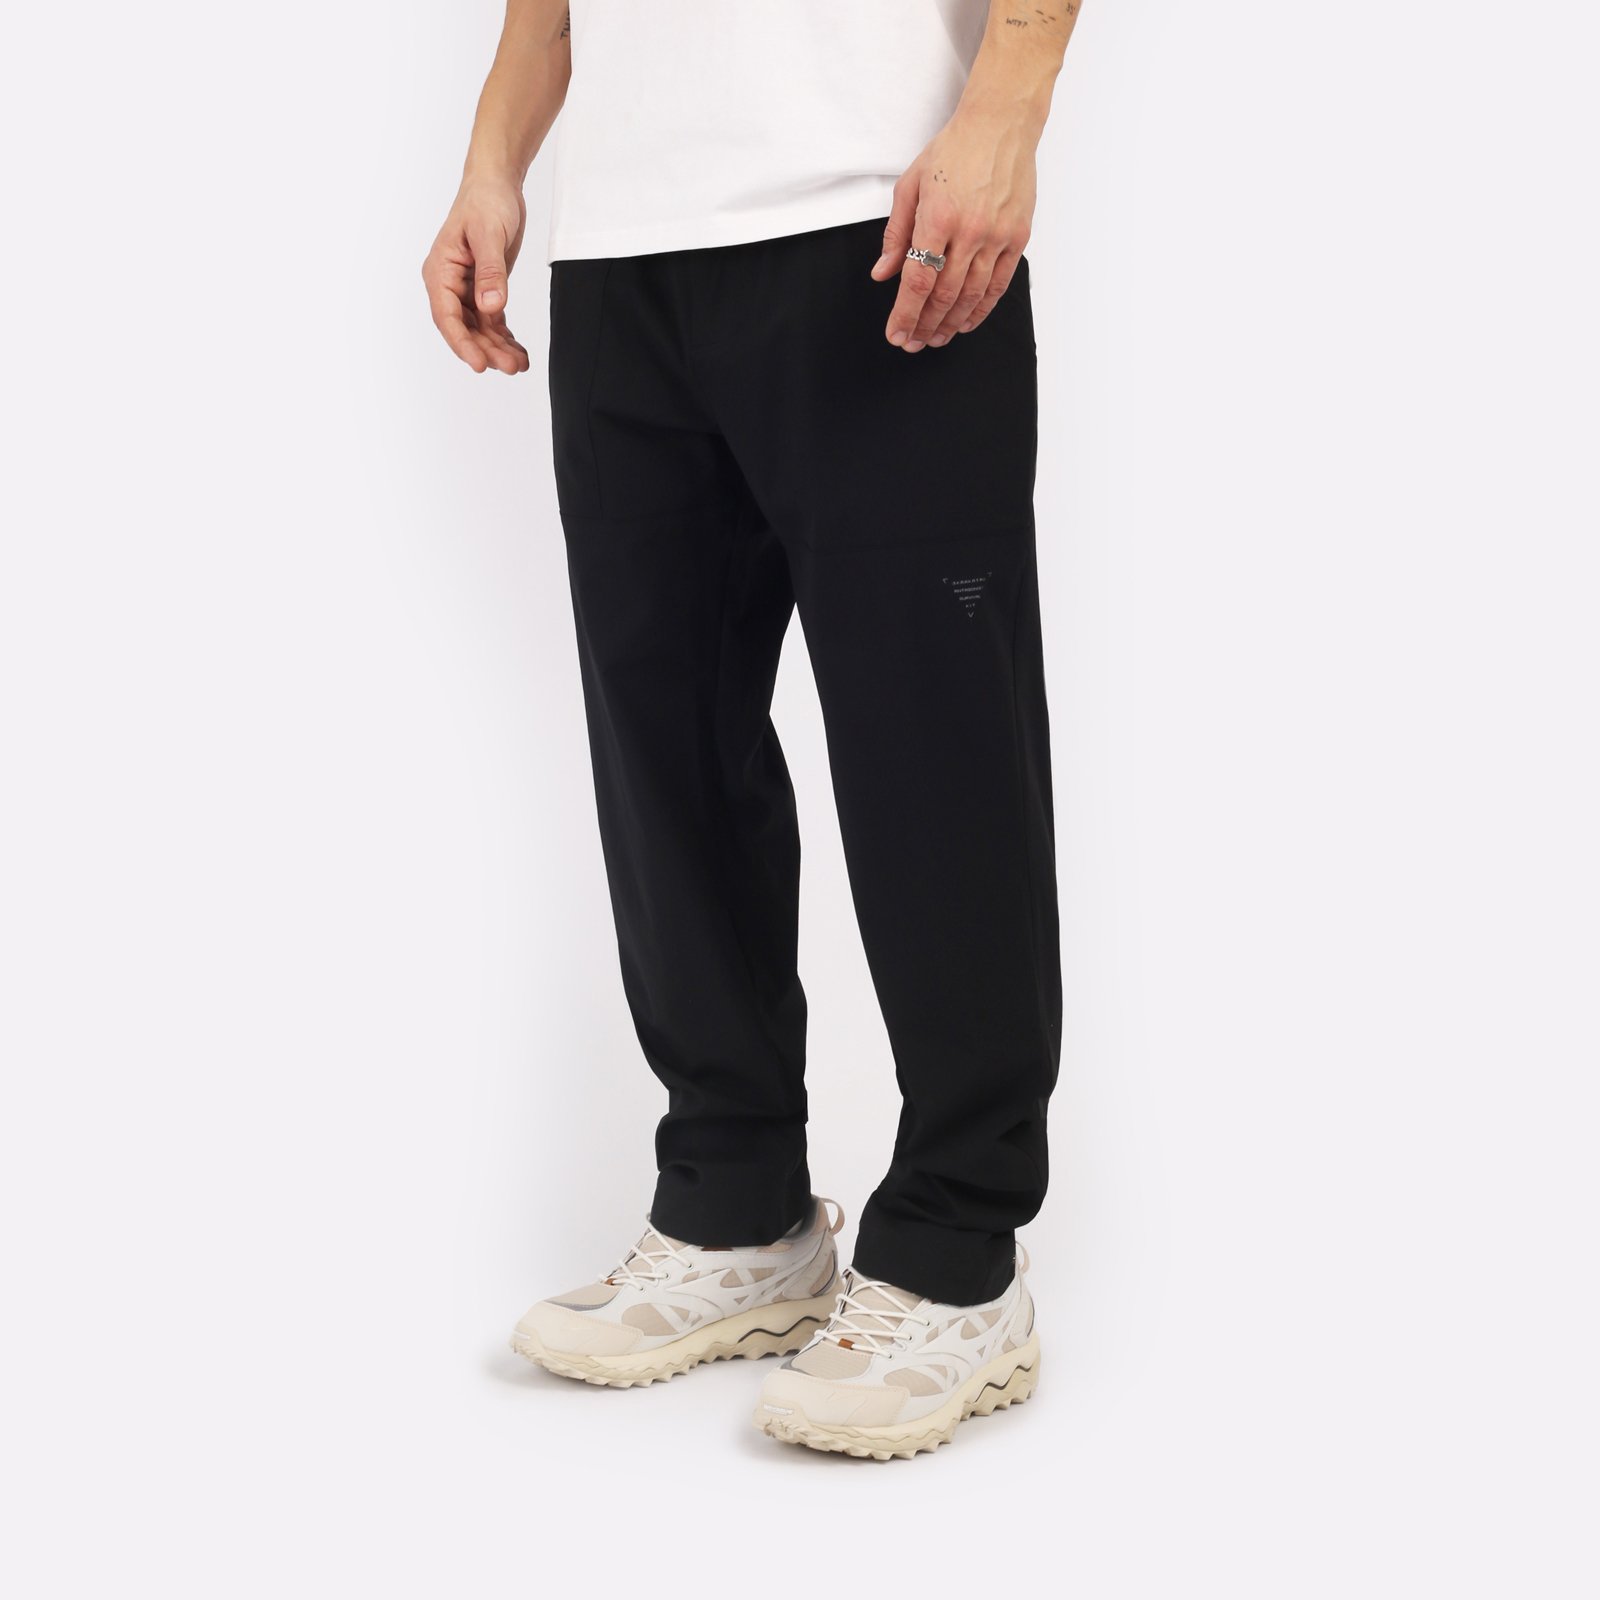 мужские брюки KRAKATAU Rm180-1  (Rm180-1-чёрный)  - цена, описание, фото 3